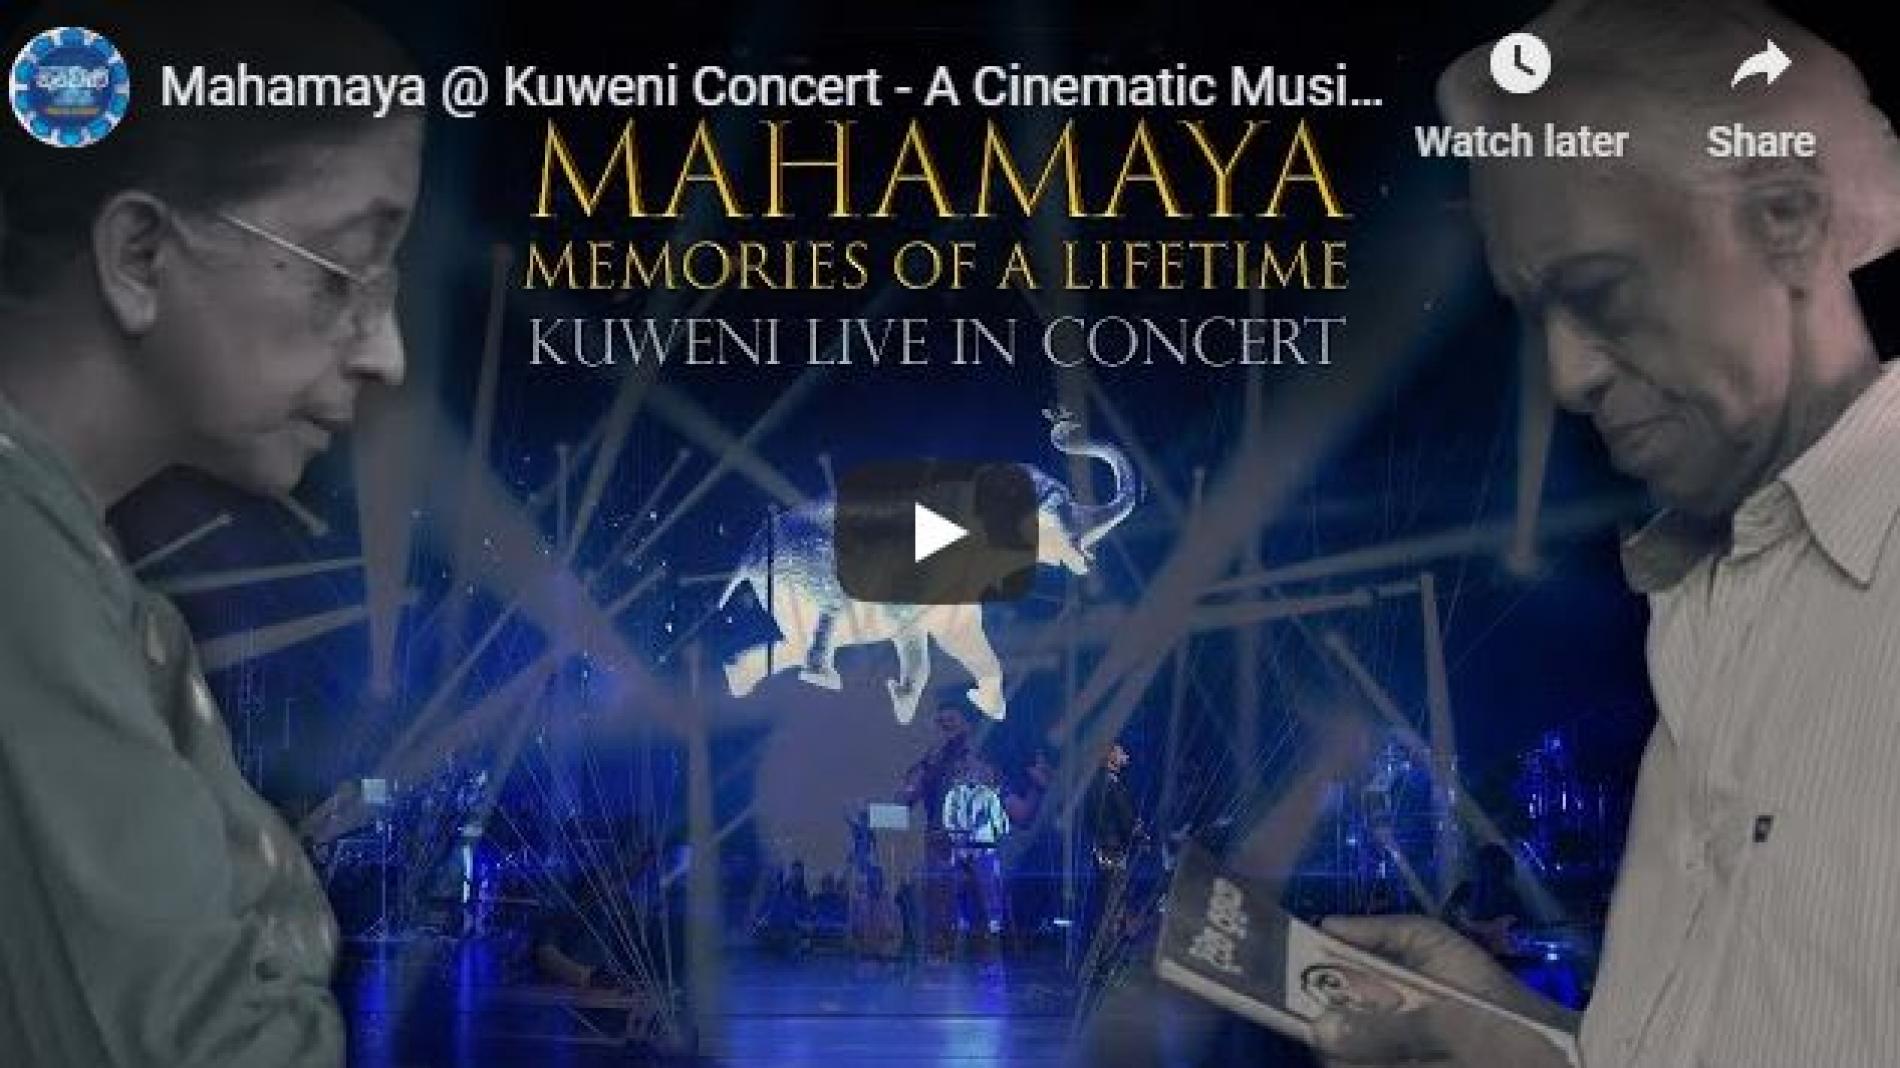 New Music : Mahamaya @ Kuweni Concert – A Cinematic Musical Experience by Charitha Attalage (ft Supun Perera)